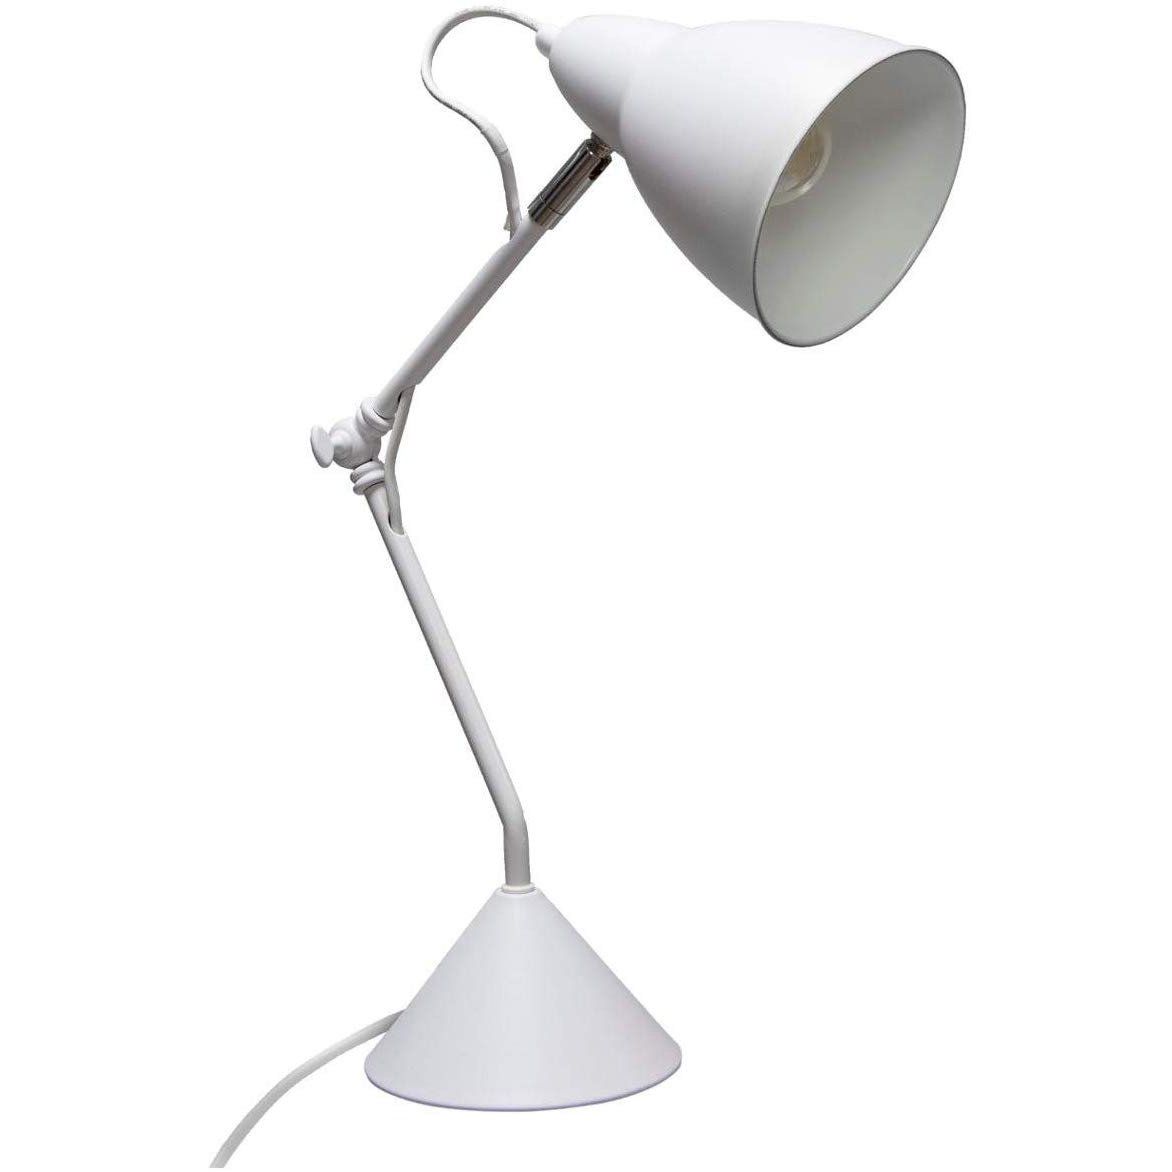 DekorStyle Stolní lampa Aude bílá 62 cm - EMAKO.CZ s.r.o.